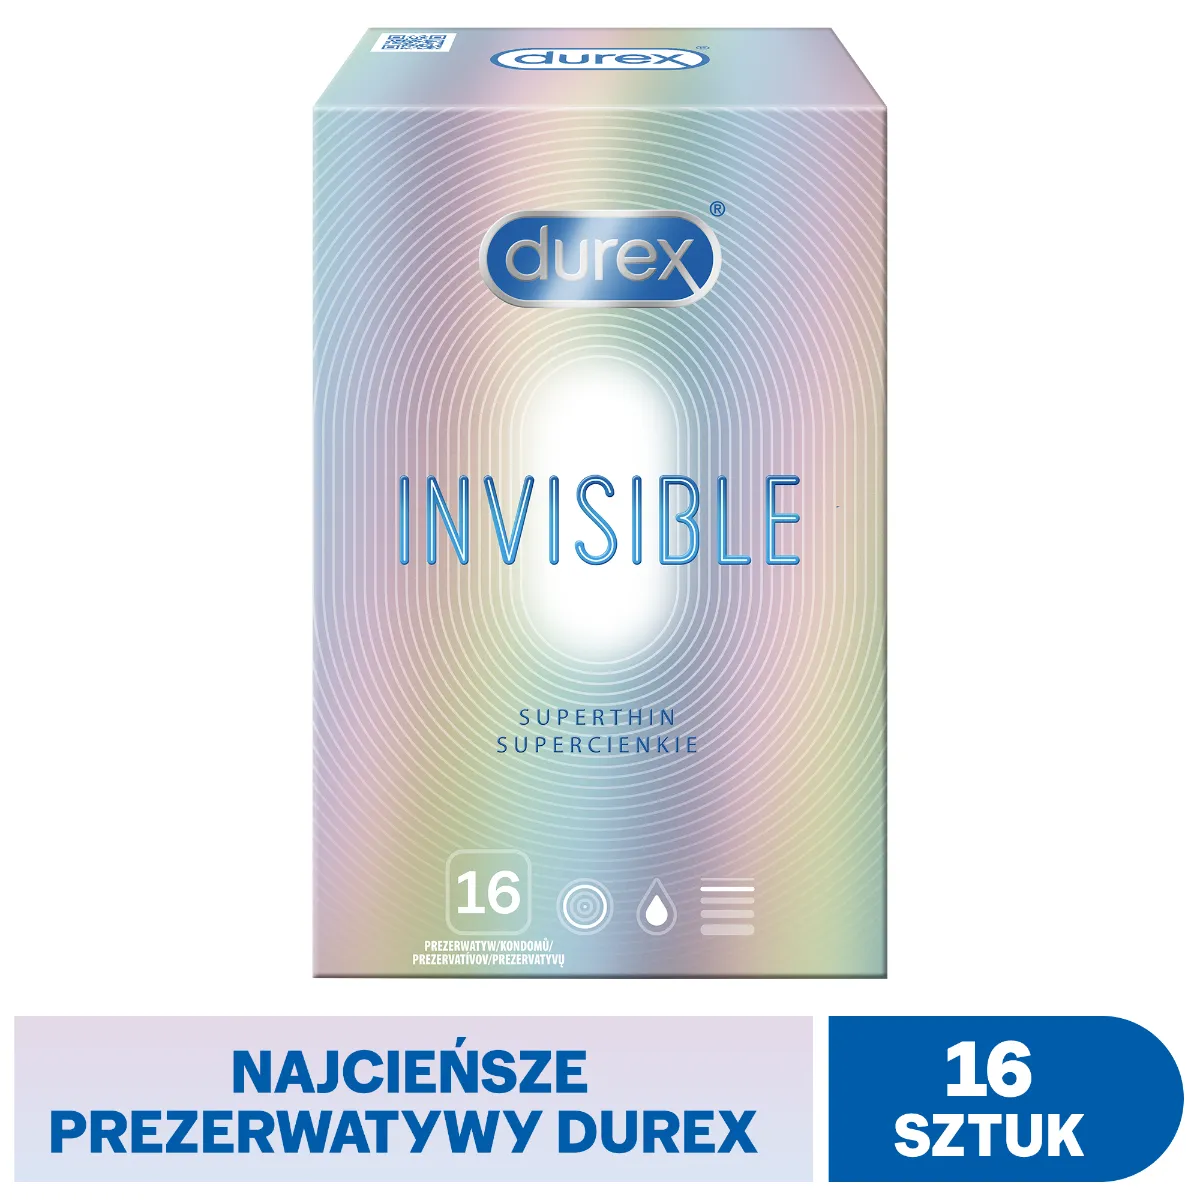 Durex Invisible Supercienkie prezerwatywy, 16 szt.